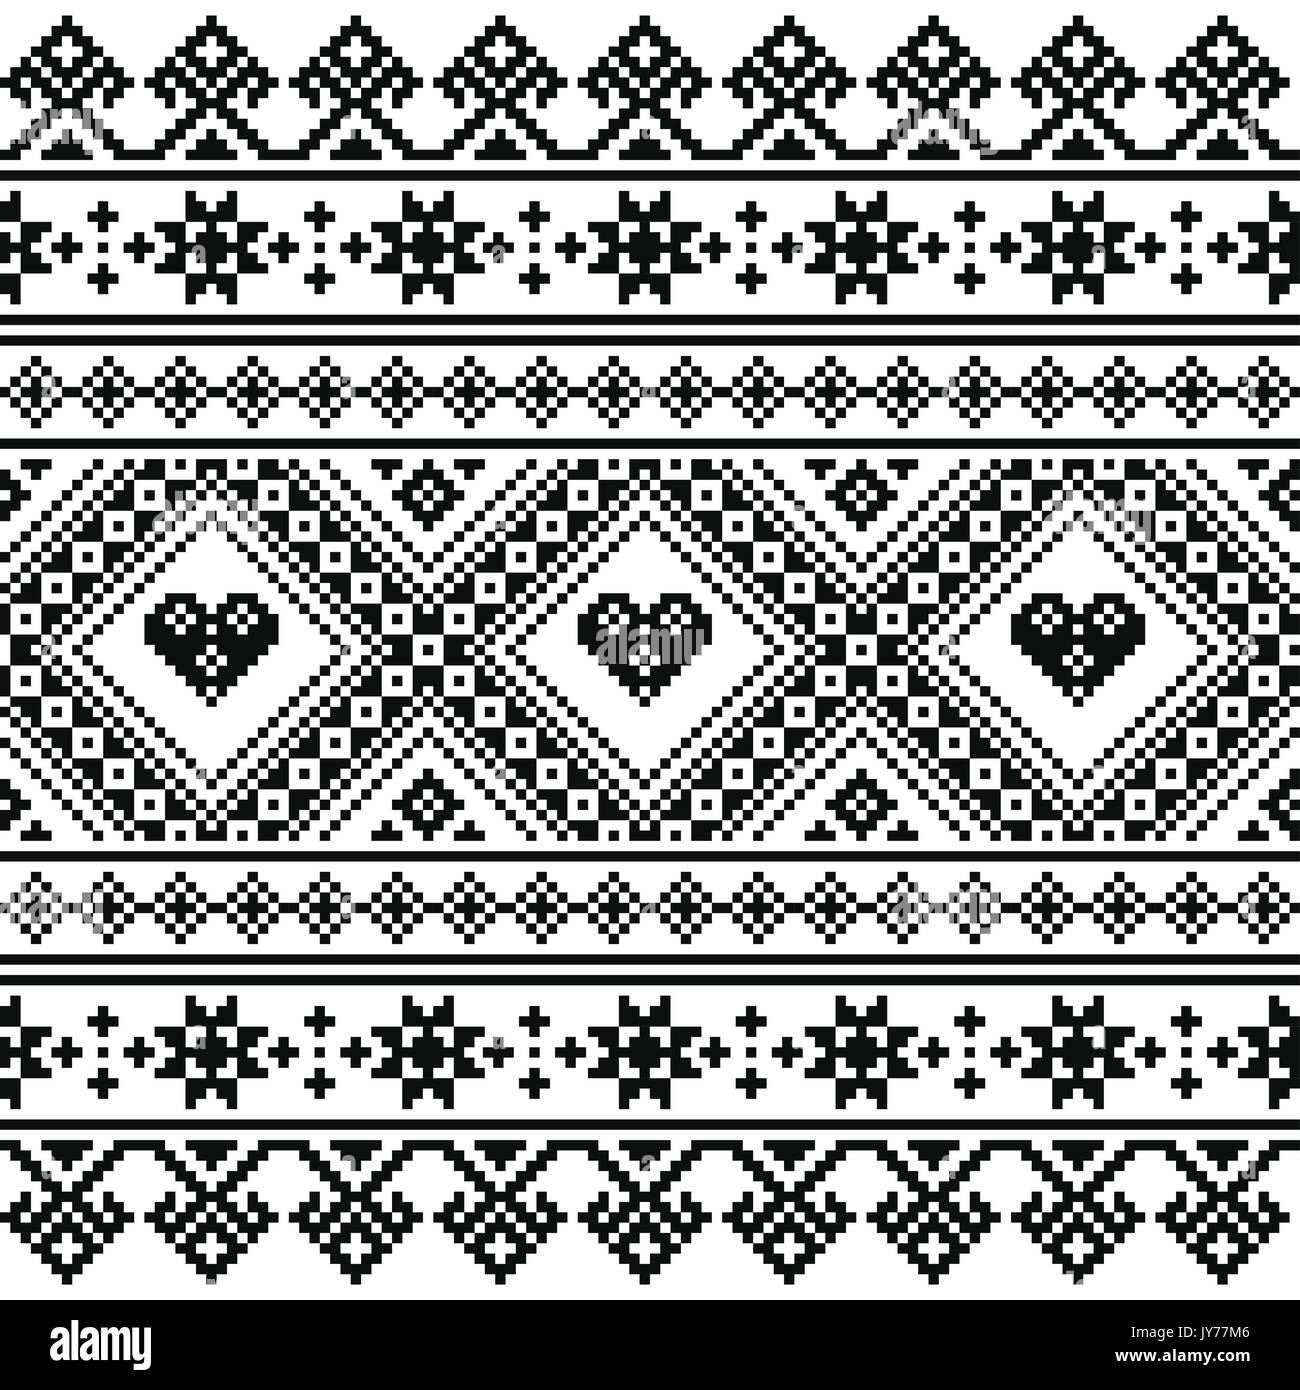 Traditional Ukrainian or Belarusian folk art knitted black embroidery pattern   Seamless monochrome design from Ukraine or Belarus on white background Stock Vector